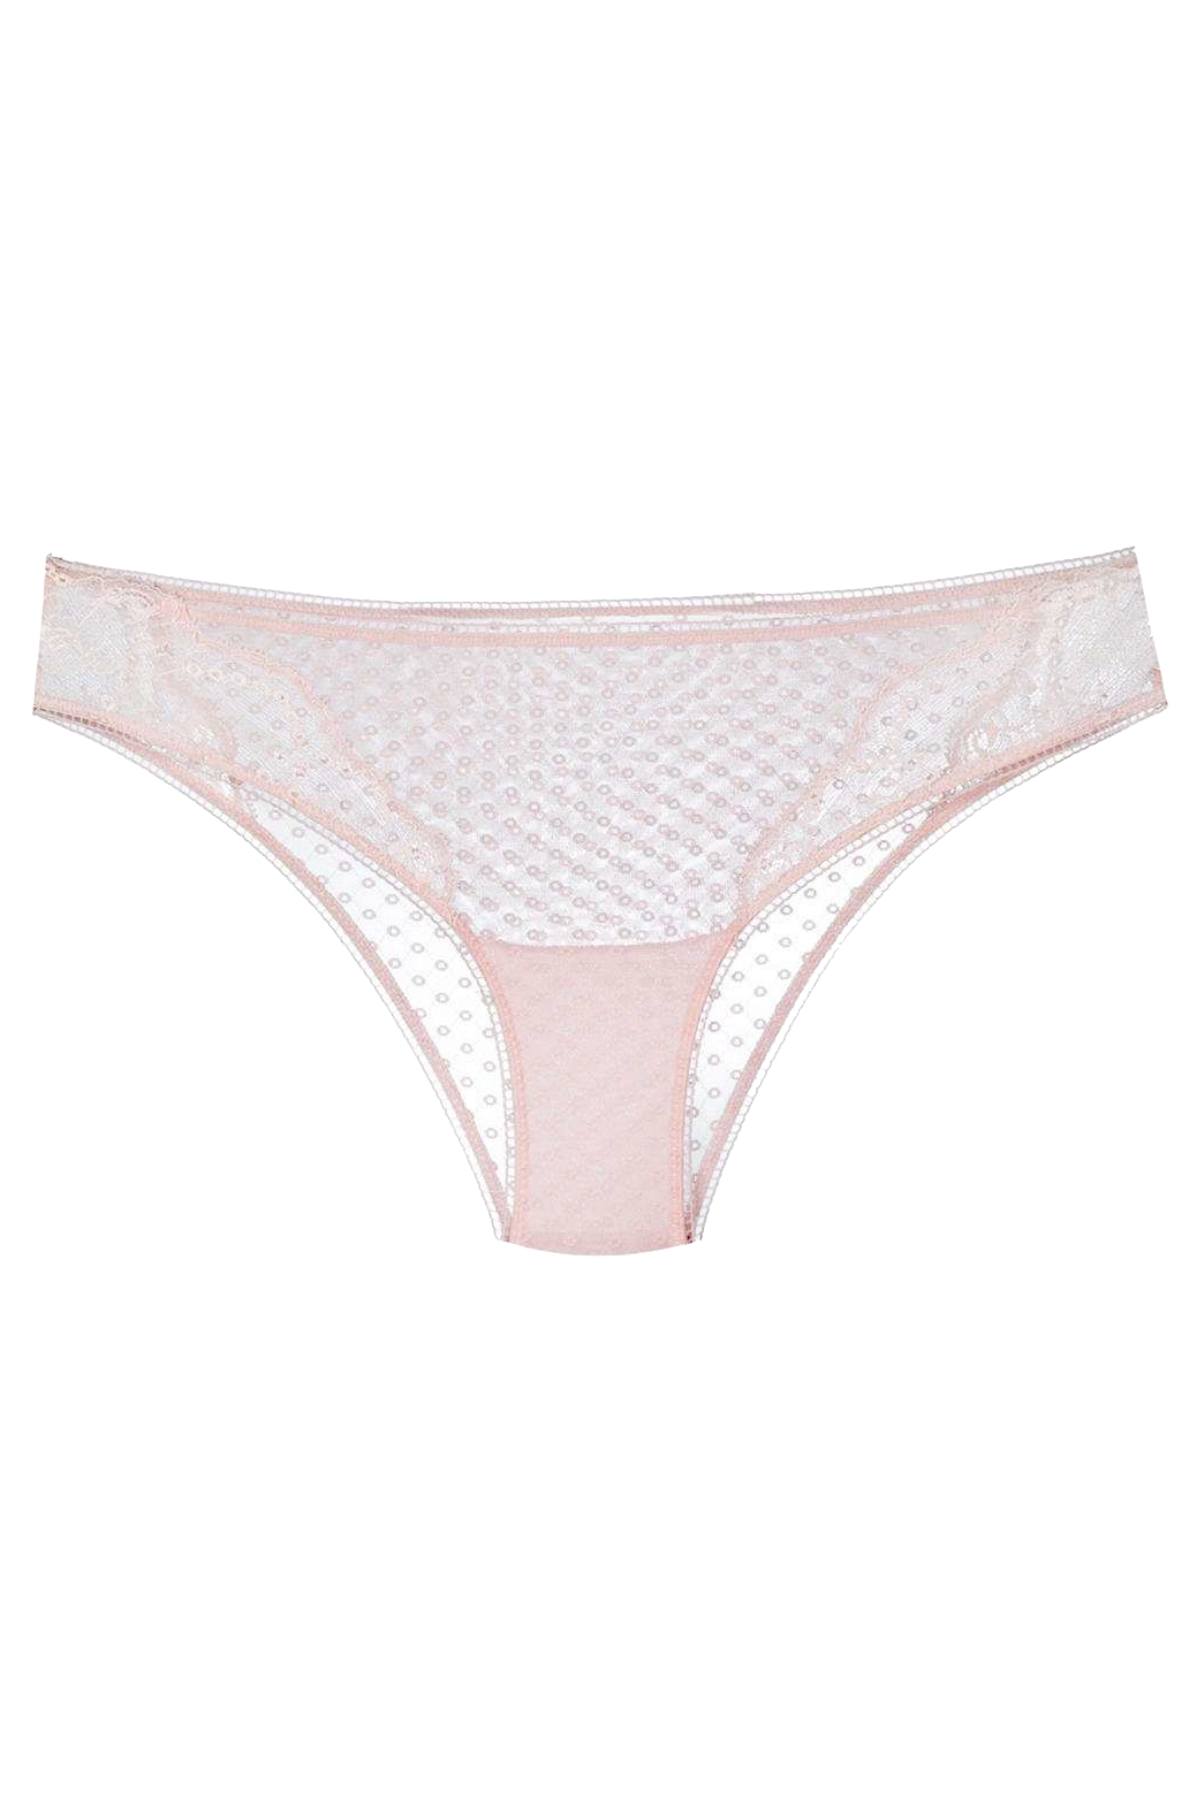 La Perla Light-Pink Tuberose Brazilian Bikini Brief